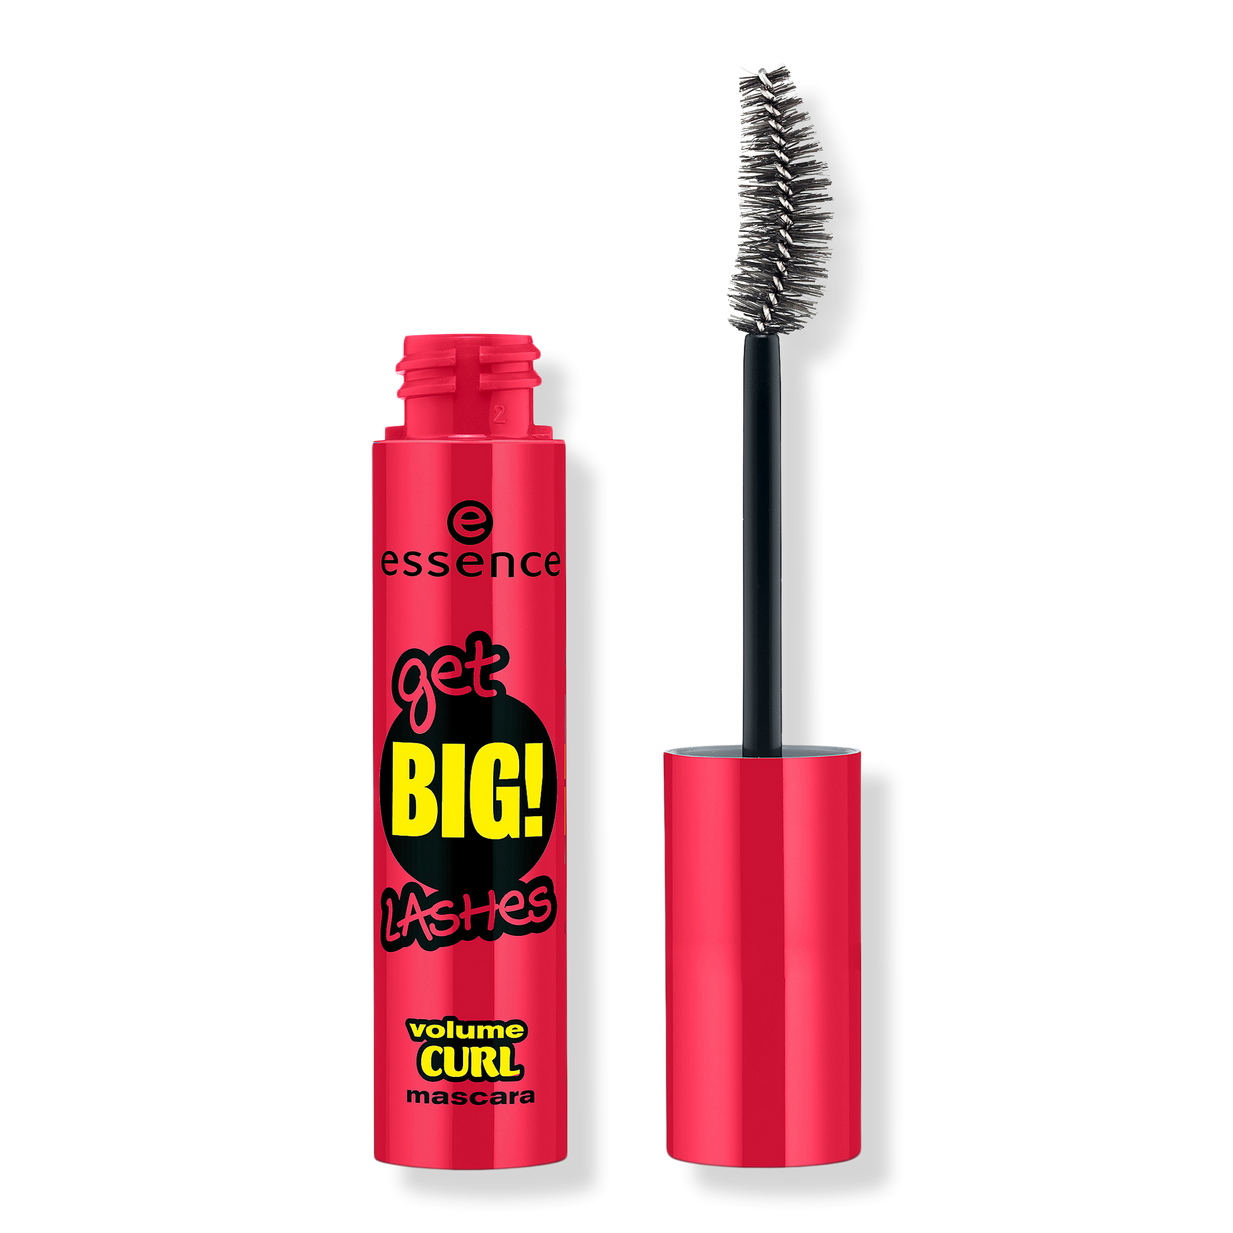 Get BIG Lashes! Volume Curl Mascara - Essence | Ulta Beauty